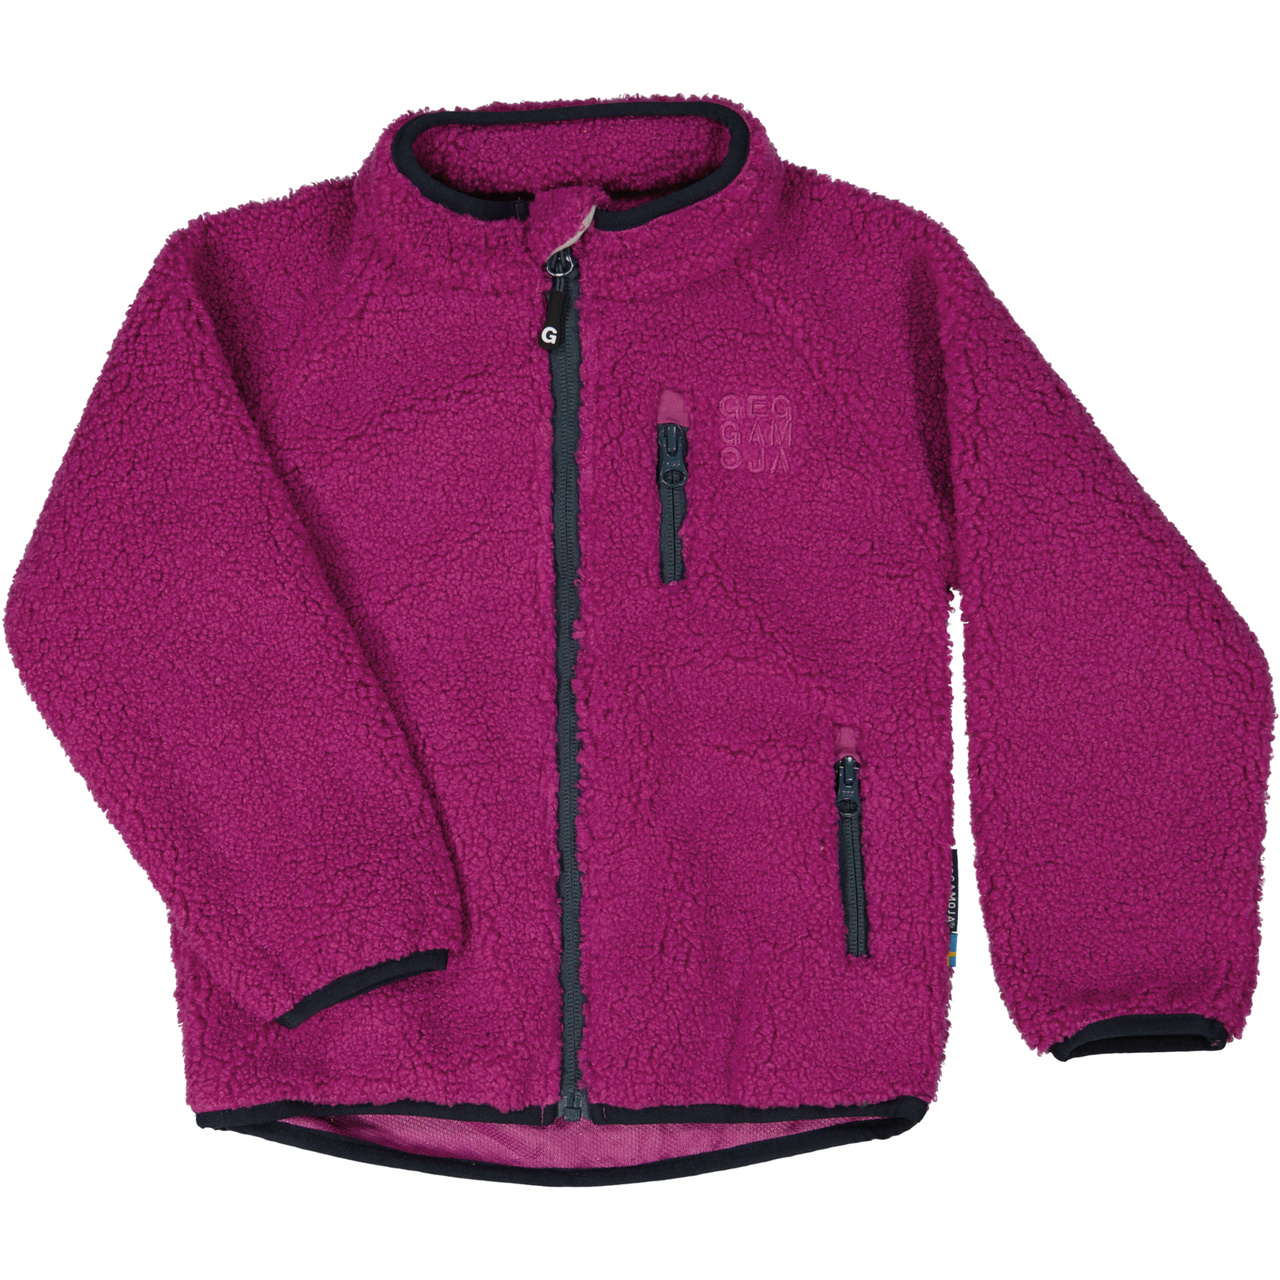 Pile teen jacket Deep purple  170